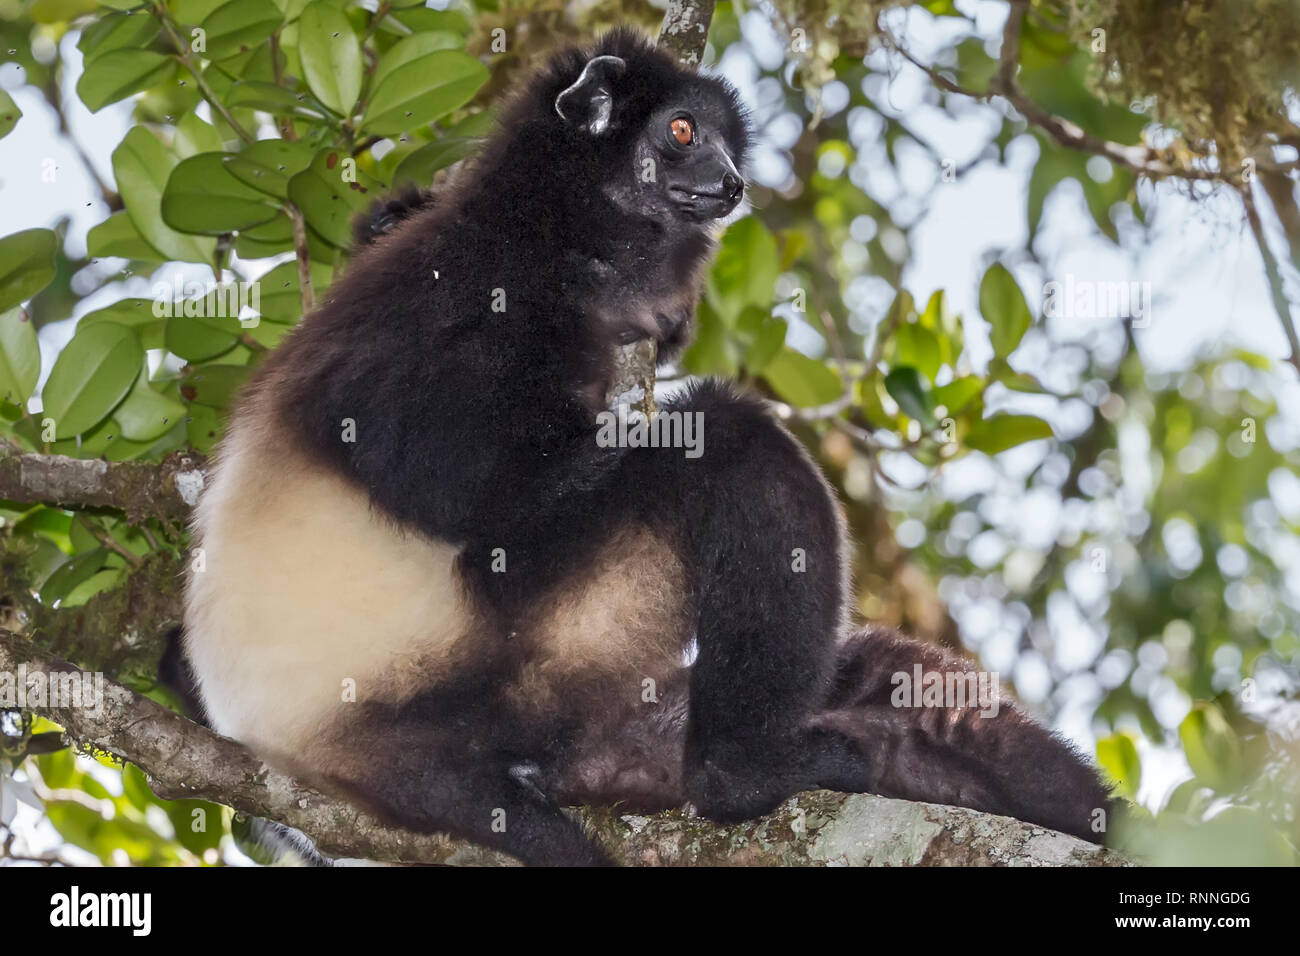 Der milne-edward Sifika, Lemur, Propithecus edwardsi, Ranomafana Nationalpark, Madagaskar Stockfoto